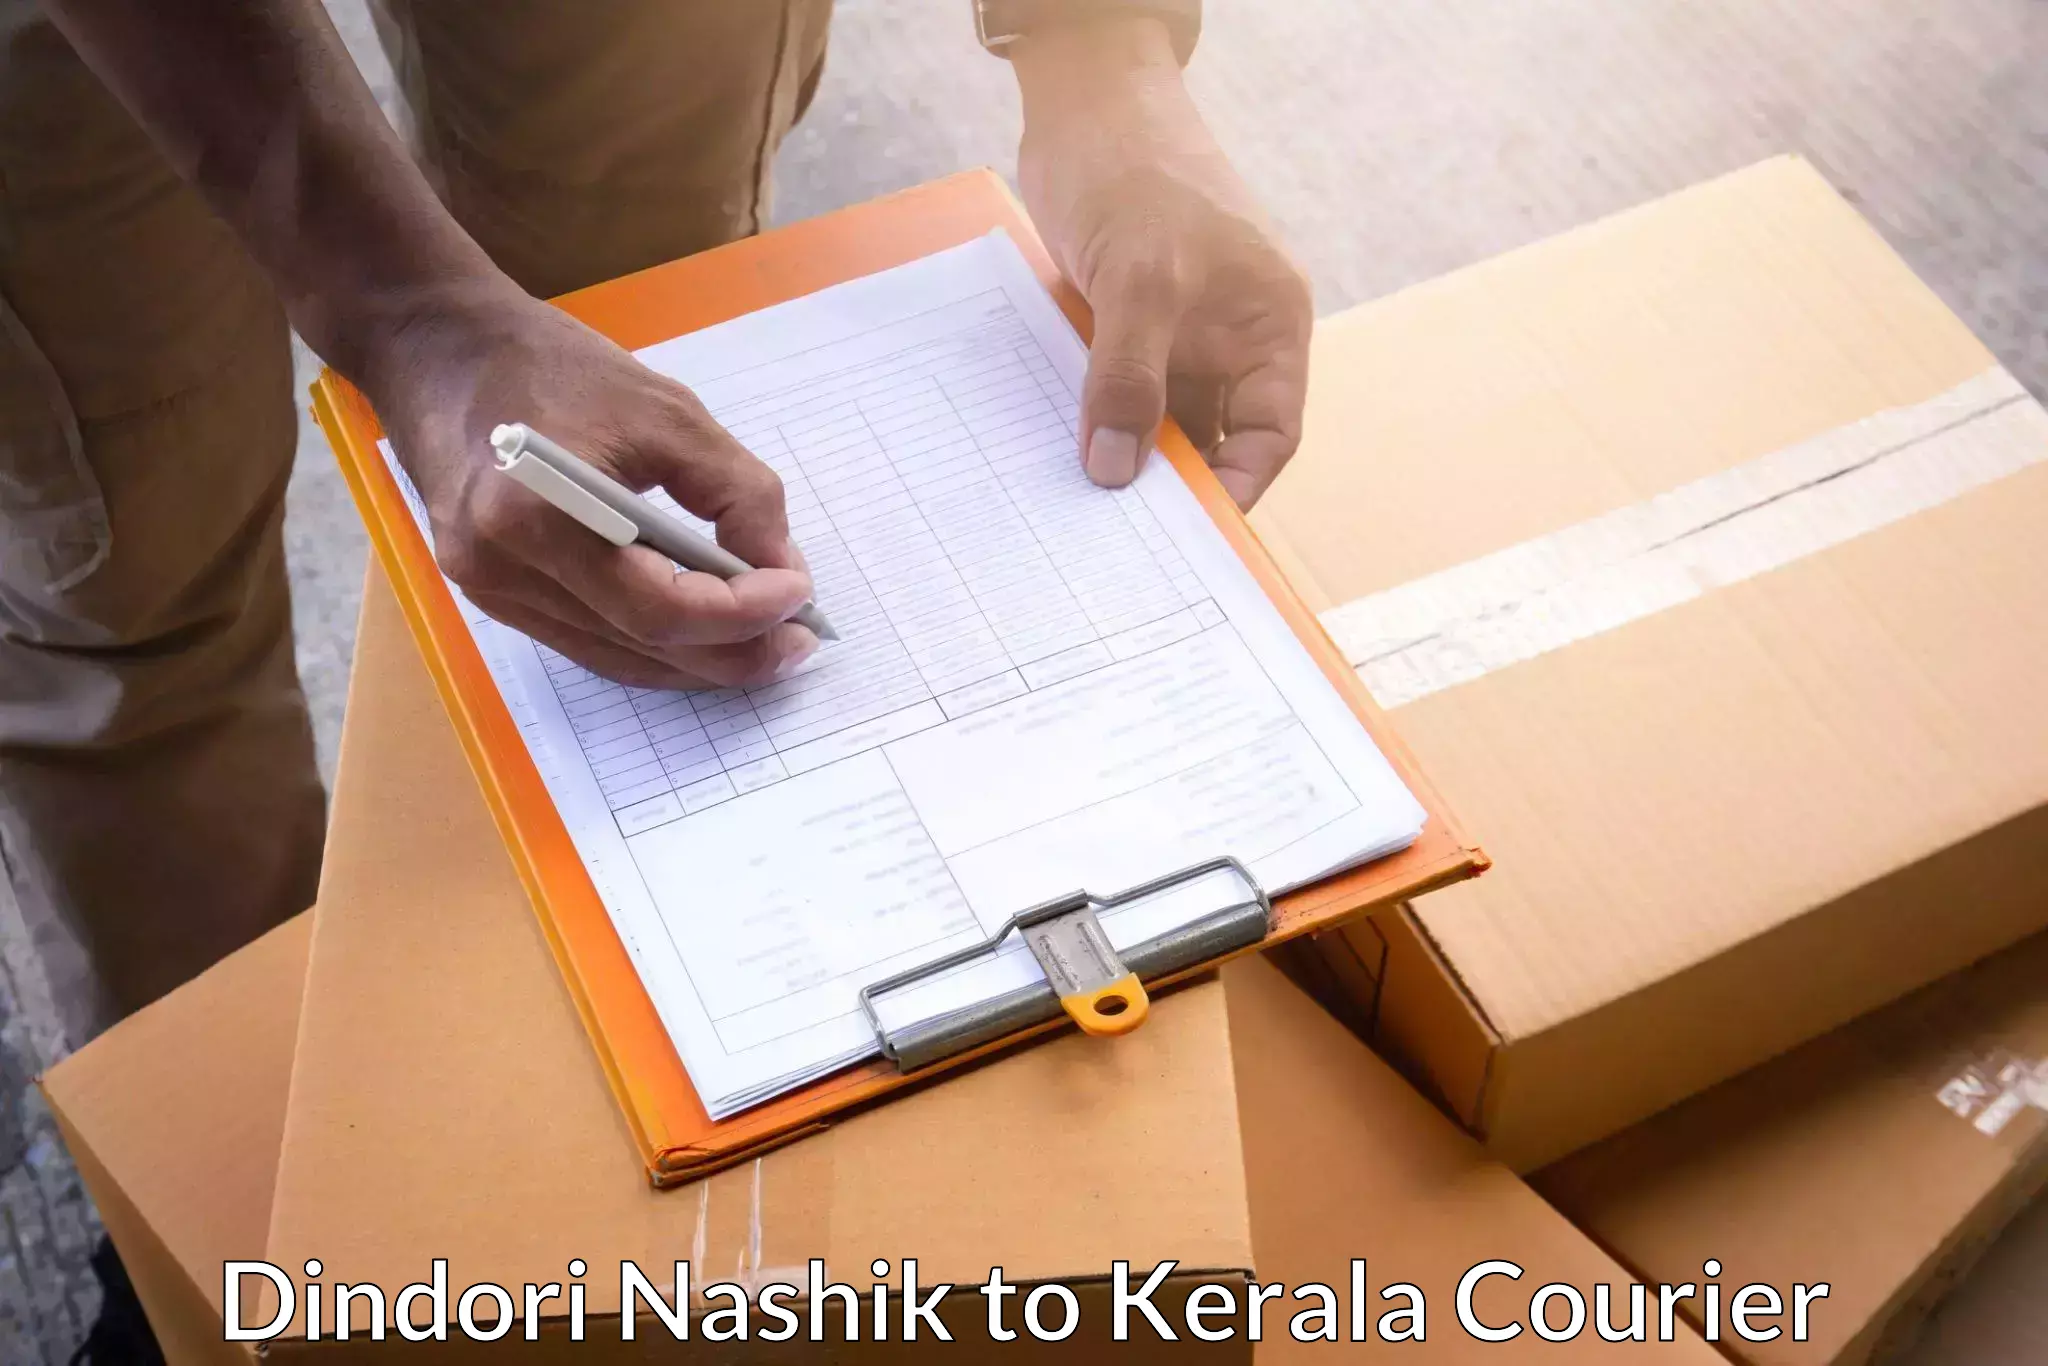 Cash on delivery service Dindori Nashik to Kakkayam